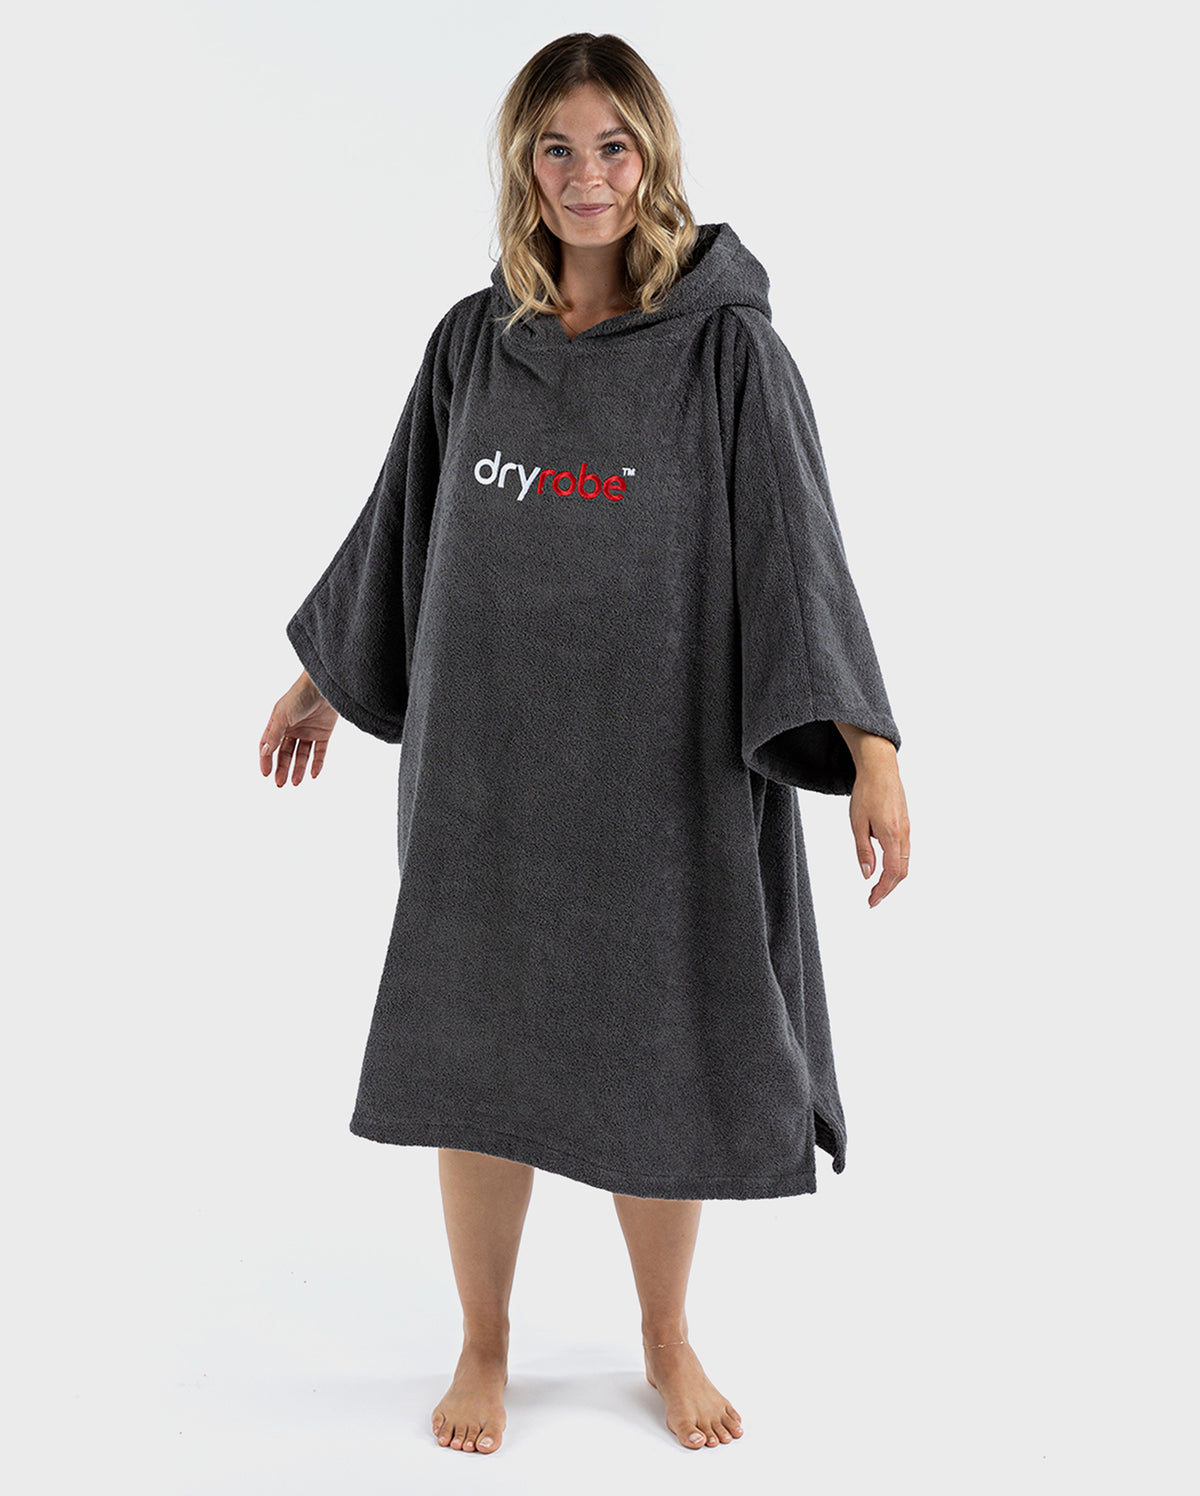 Woman wearing Slate Grey Organic Towel dryrobe®